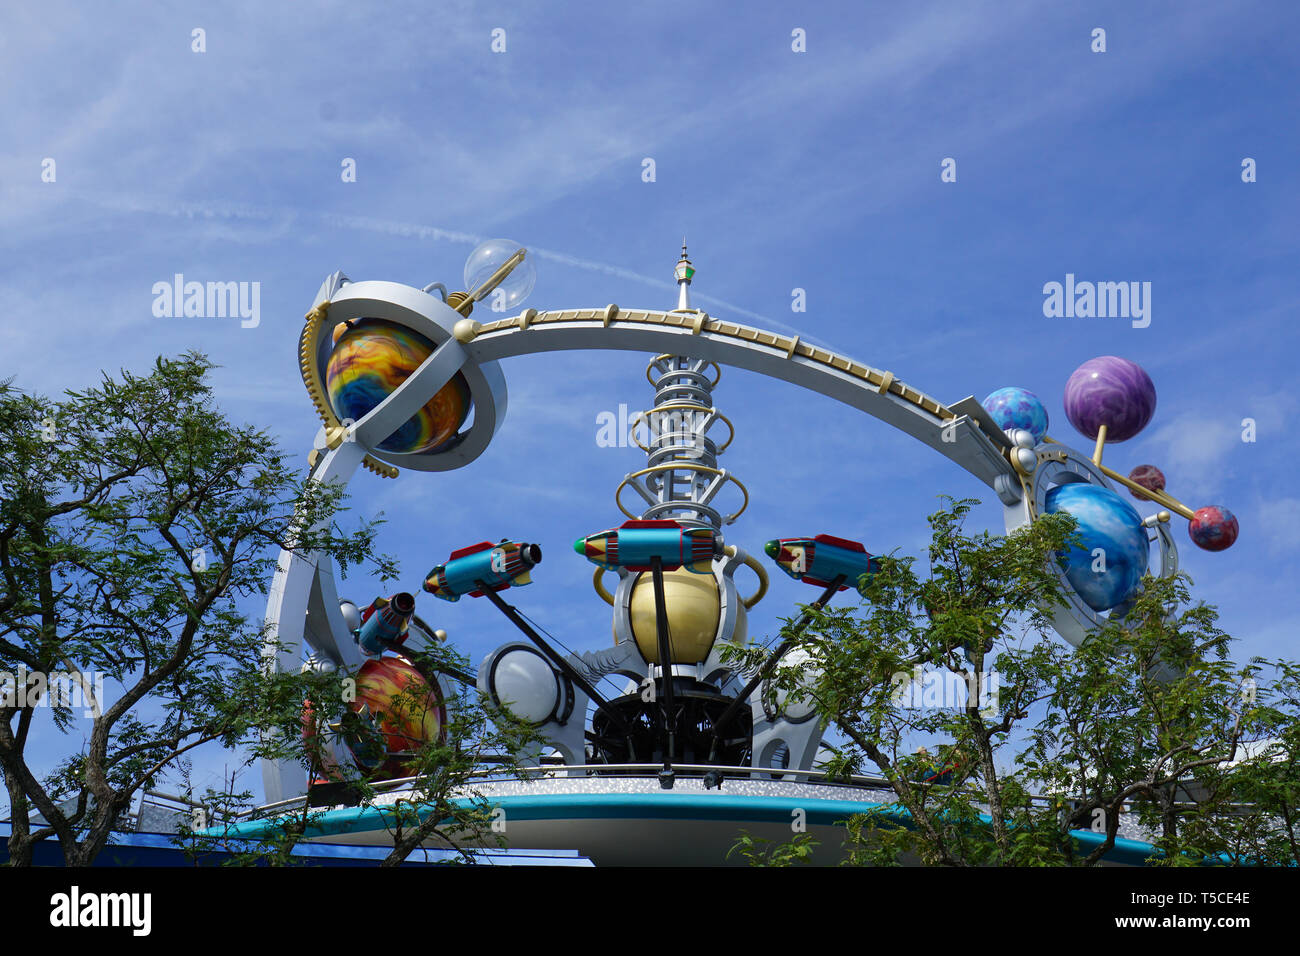 Orlando, FL/USA - 02/07/18: Disney World Astro Orbiter Ride at Magic Kingdom with Rocket circling. Stock Photo